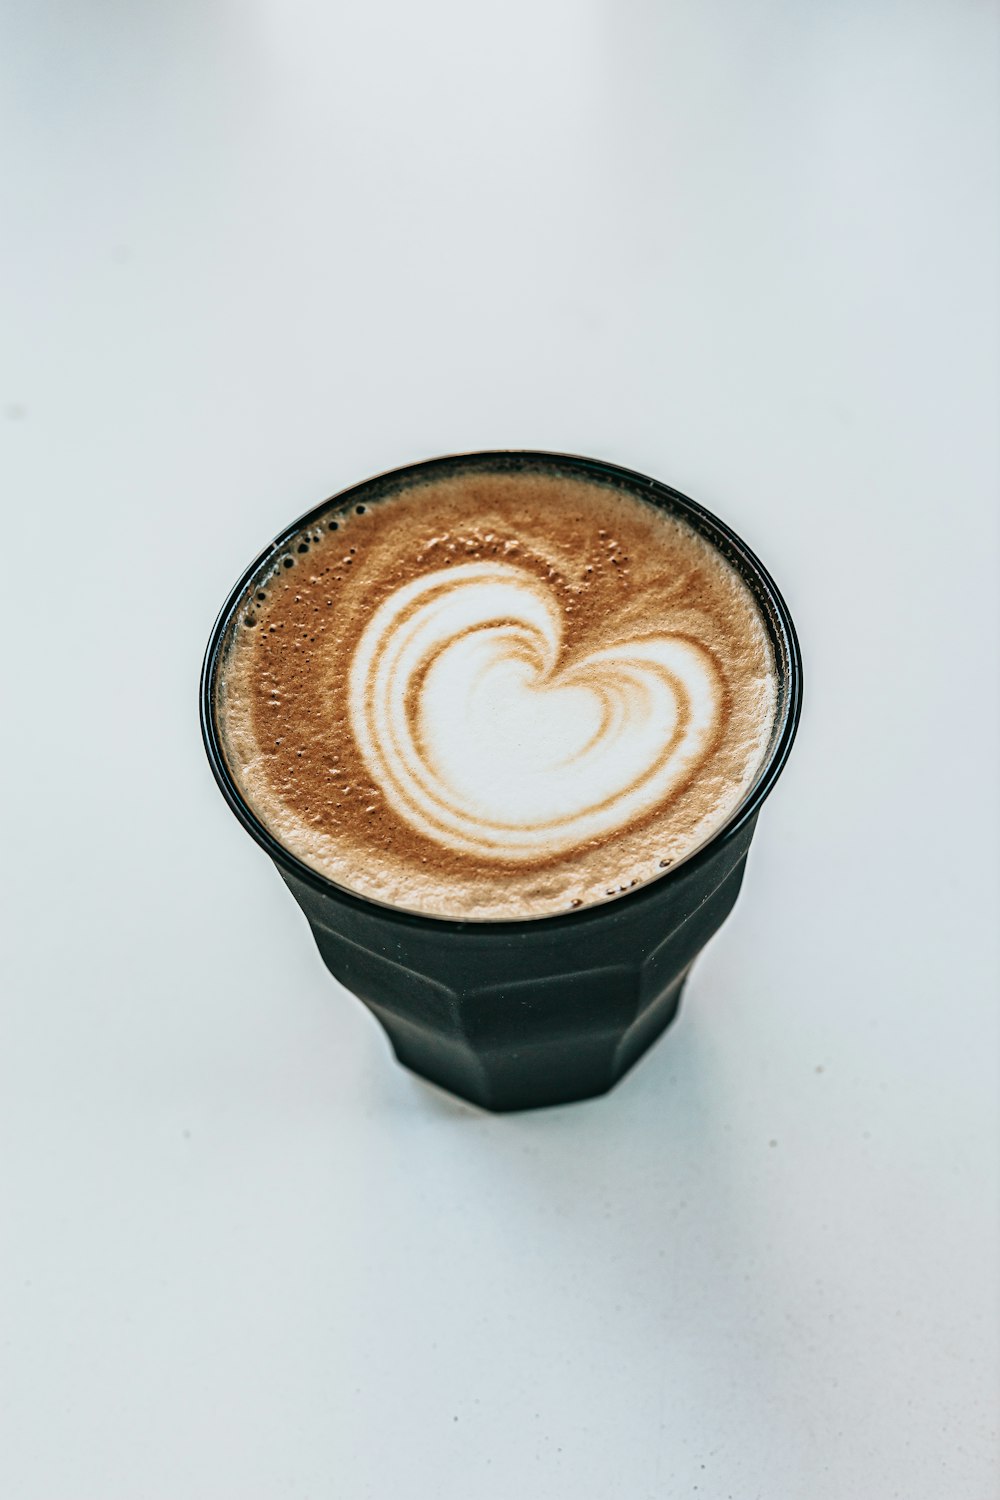 black and white ceramic mug with heart shaped coffee